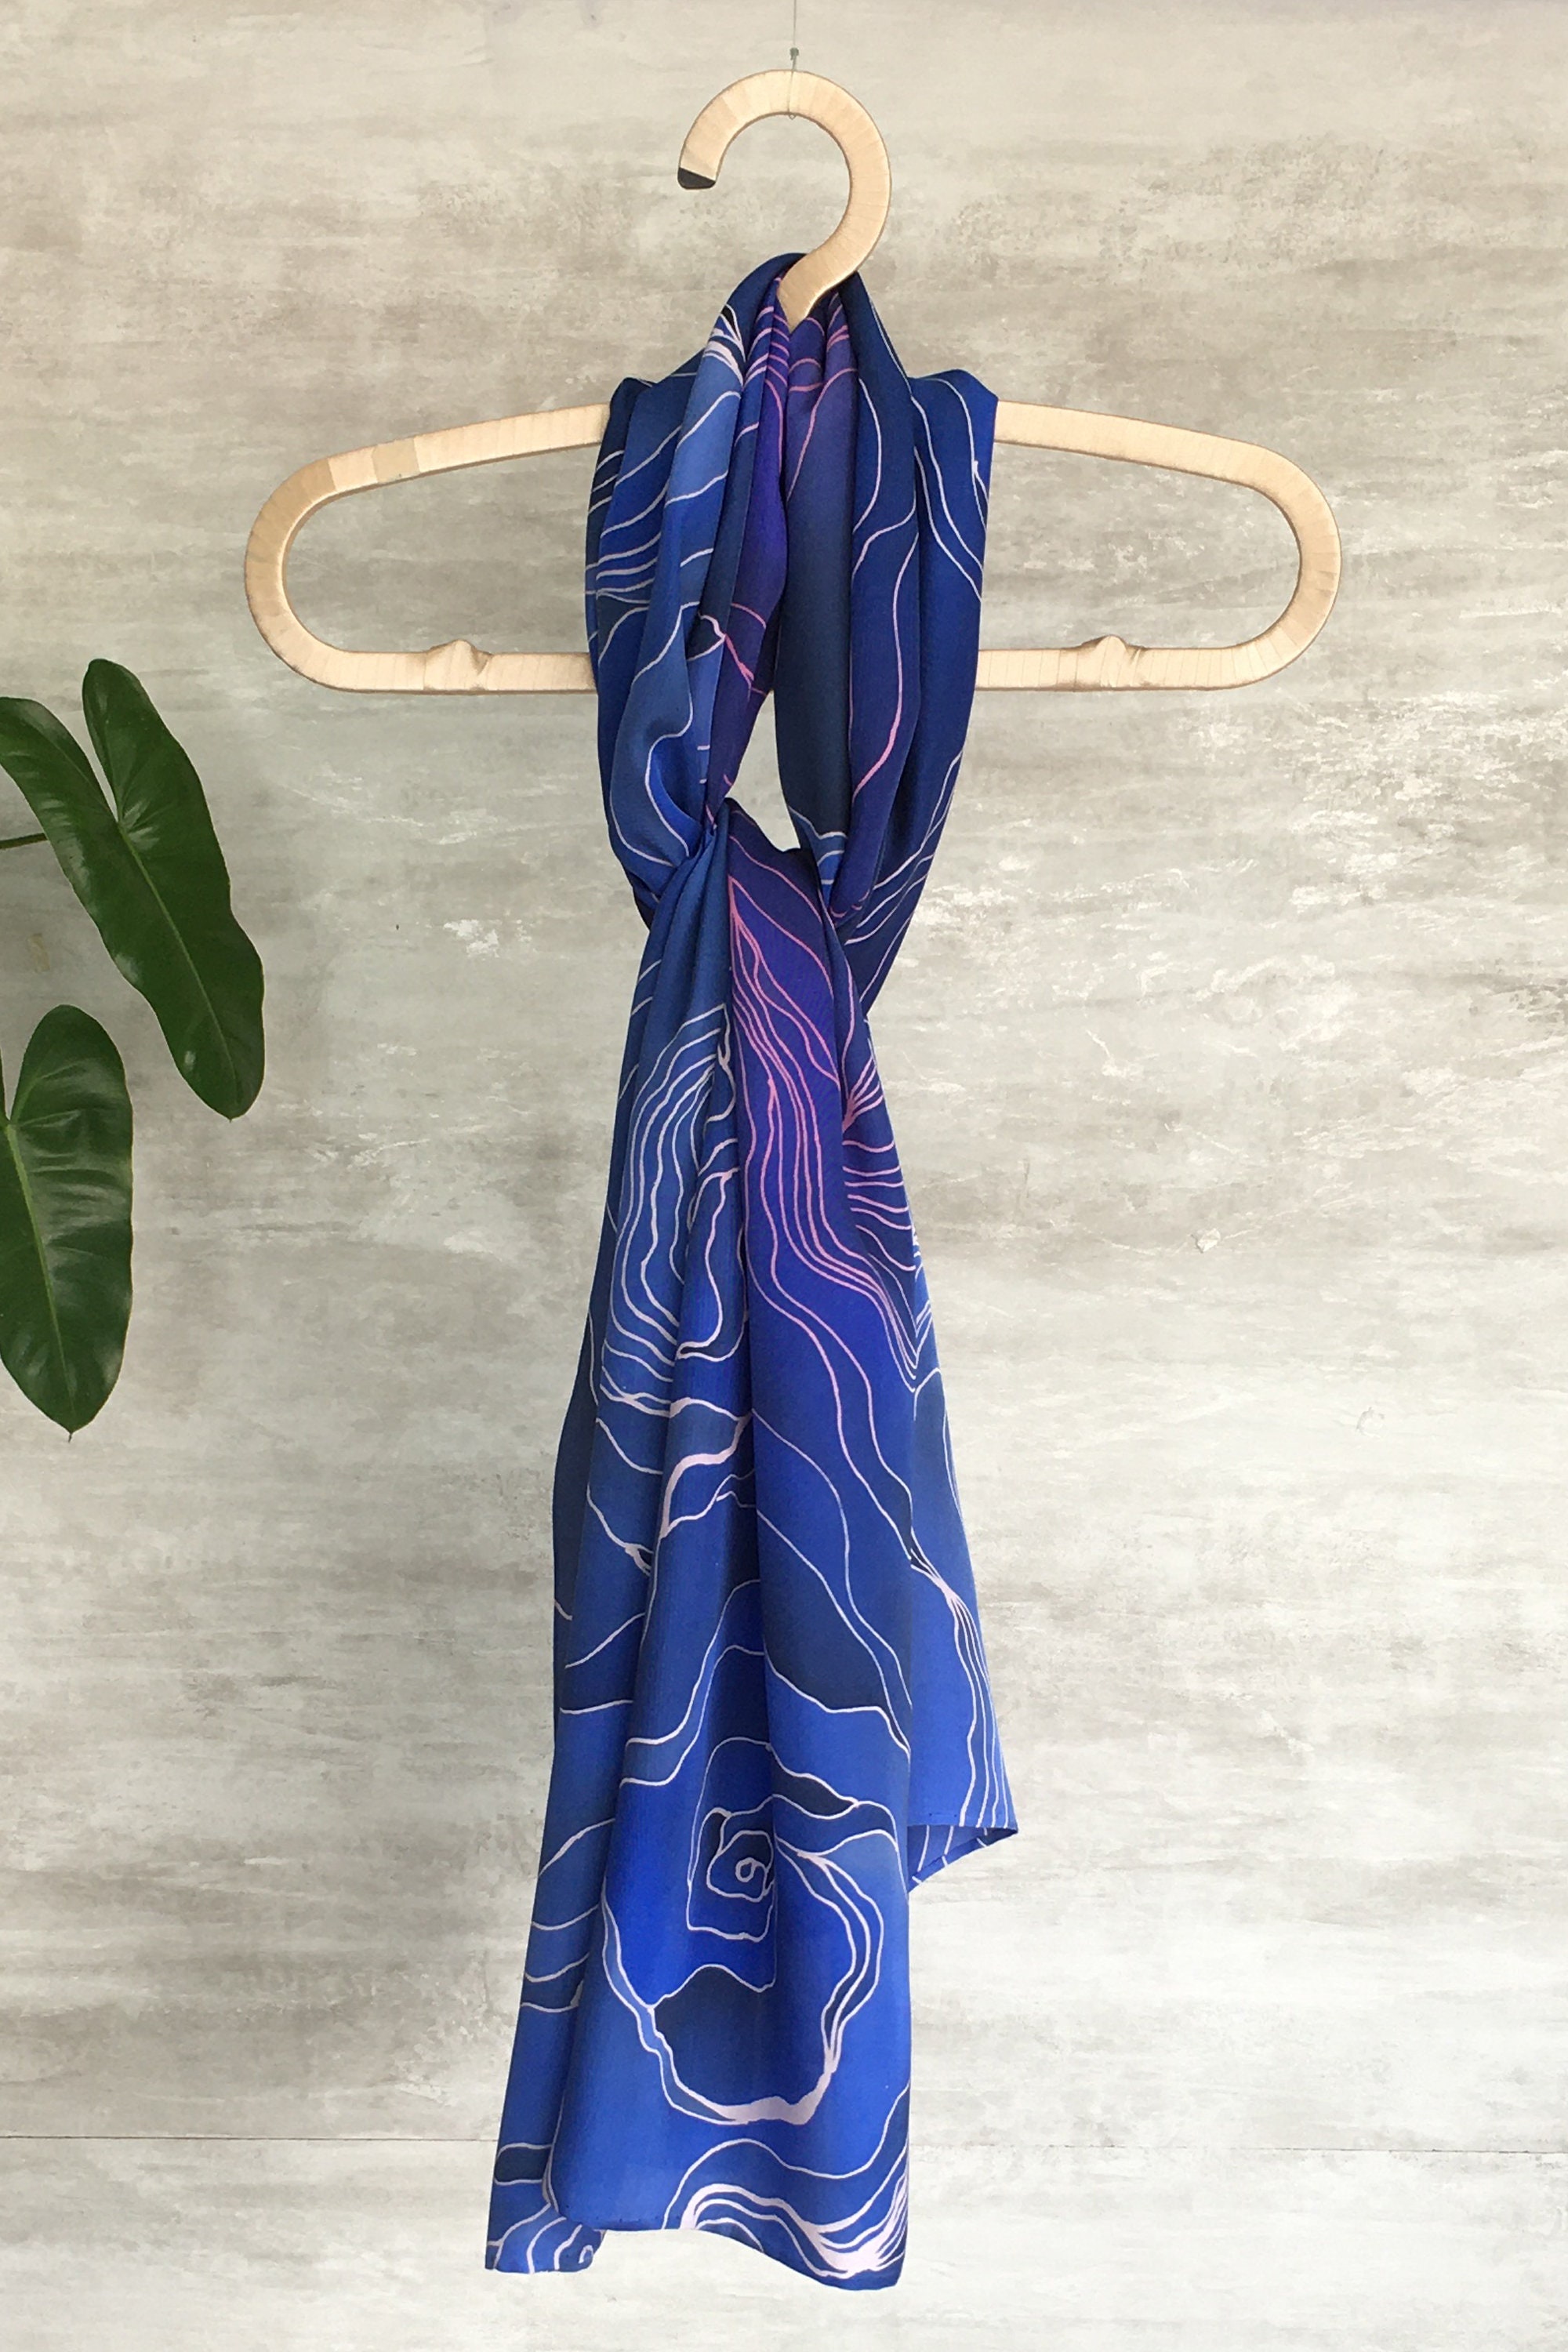 Flower in Wind Handprinted silk scarves Natural silk fabric | Etsy